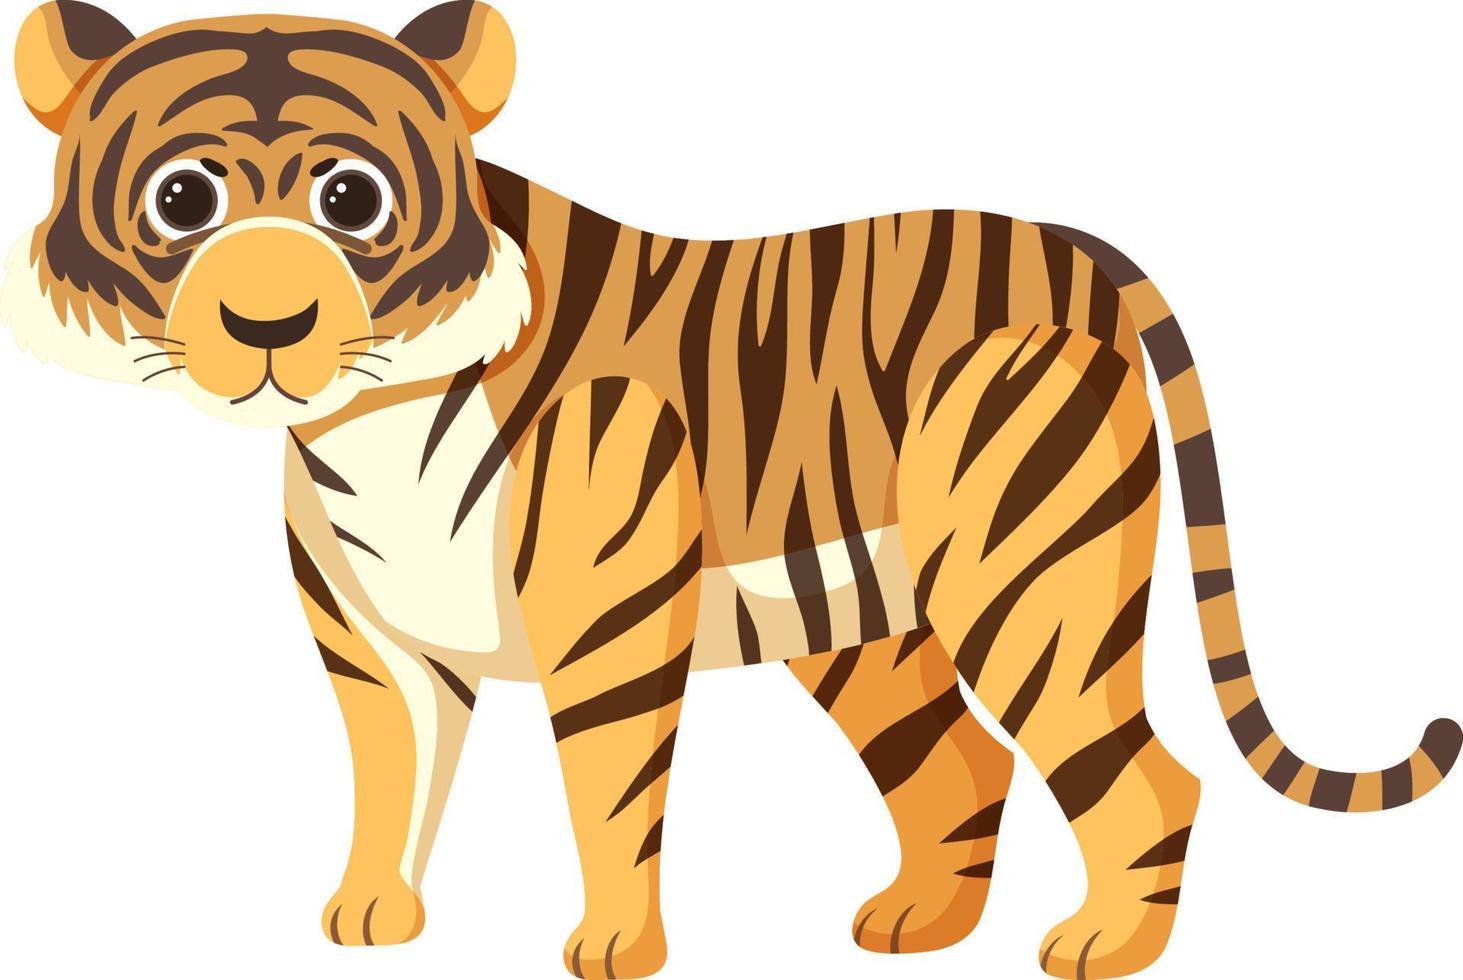 Cute tiger in flat cartoon style vector